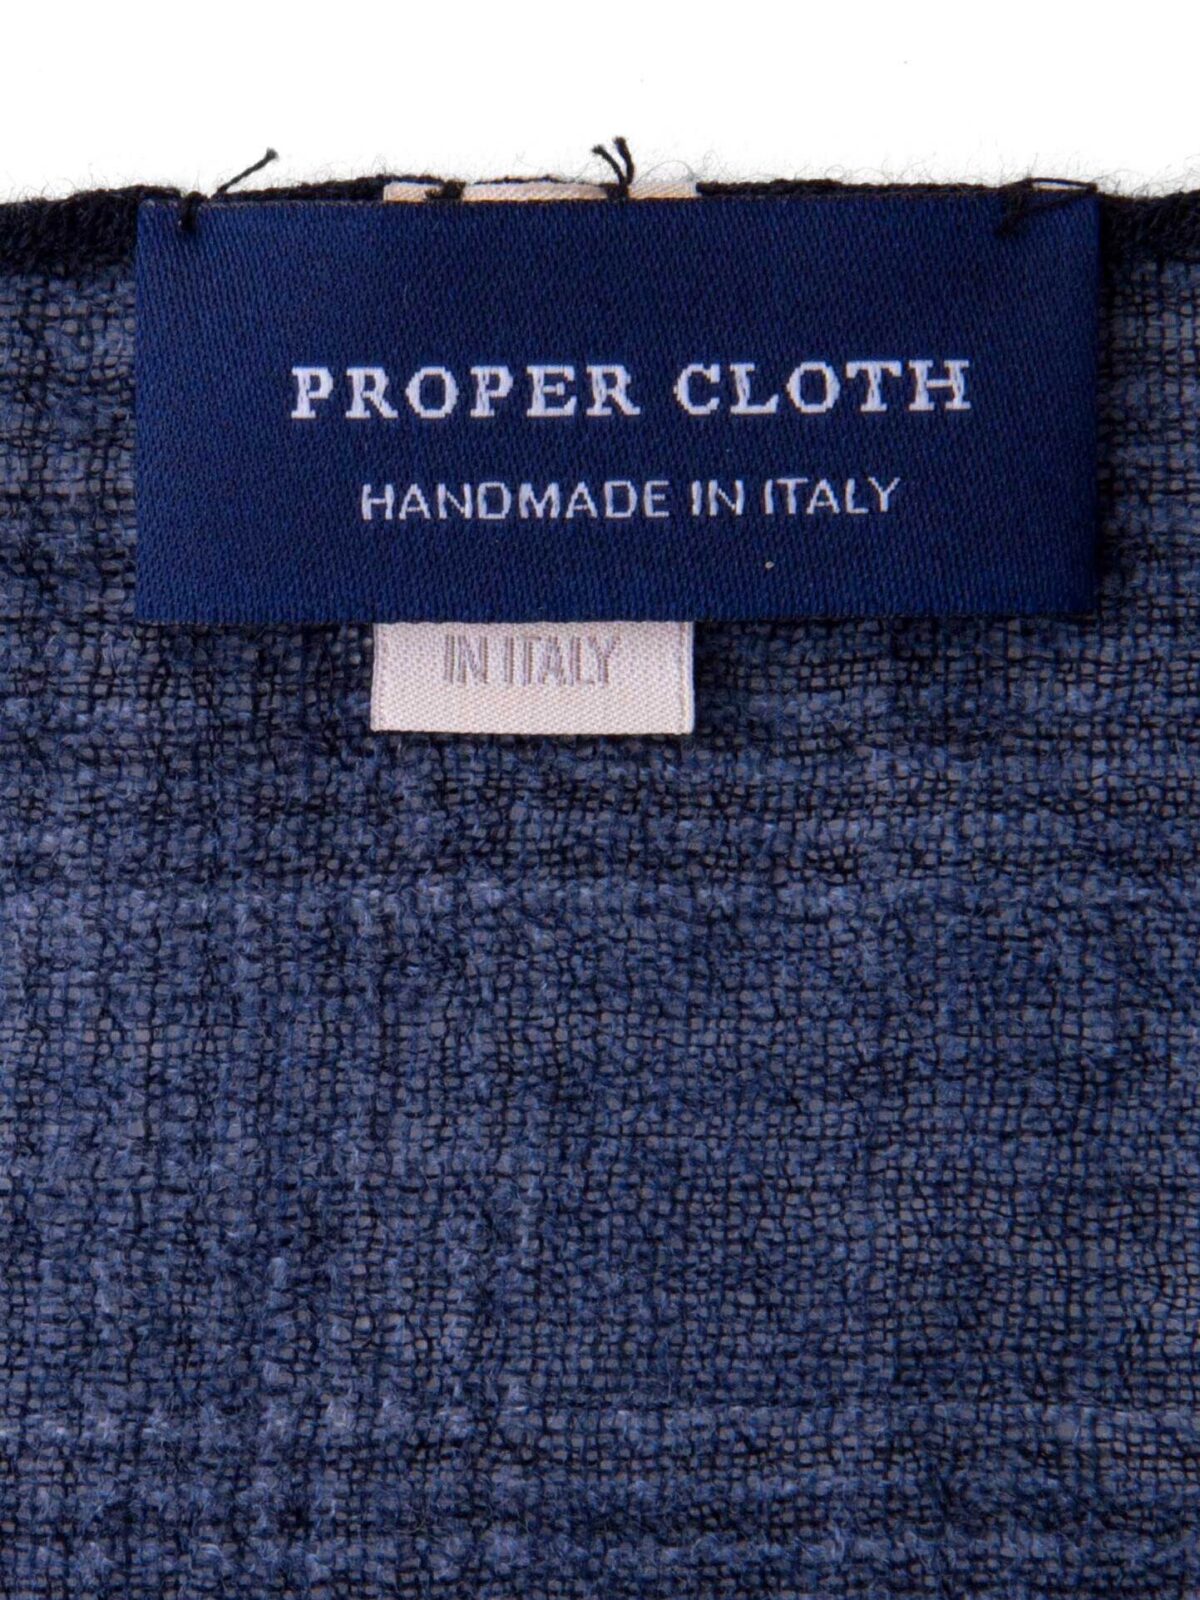 Pocket Styles - Proper Cloth Help